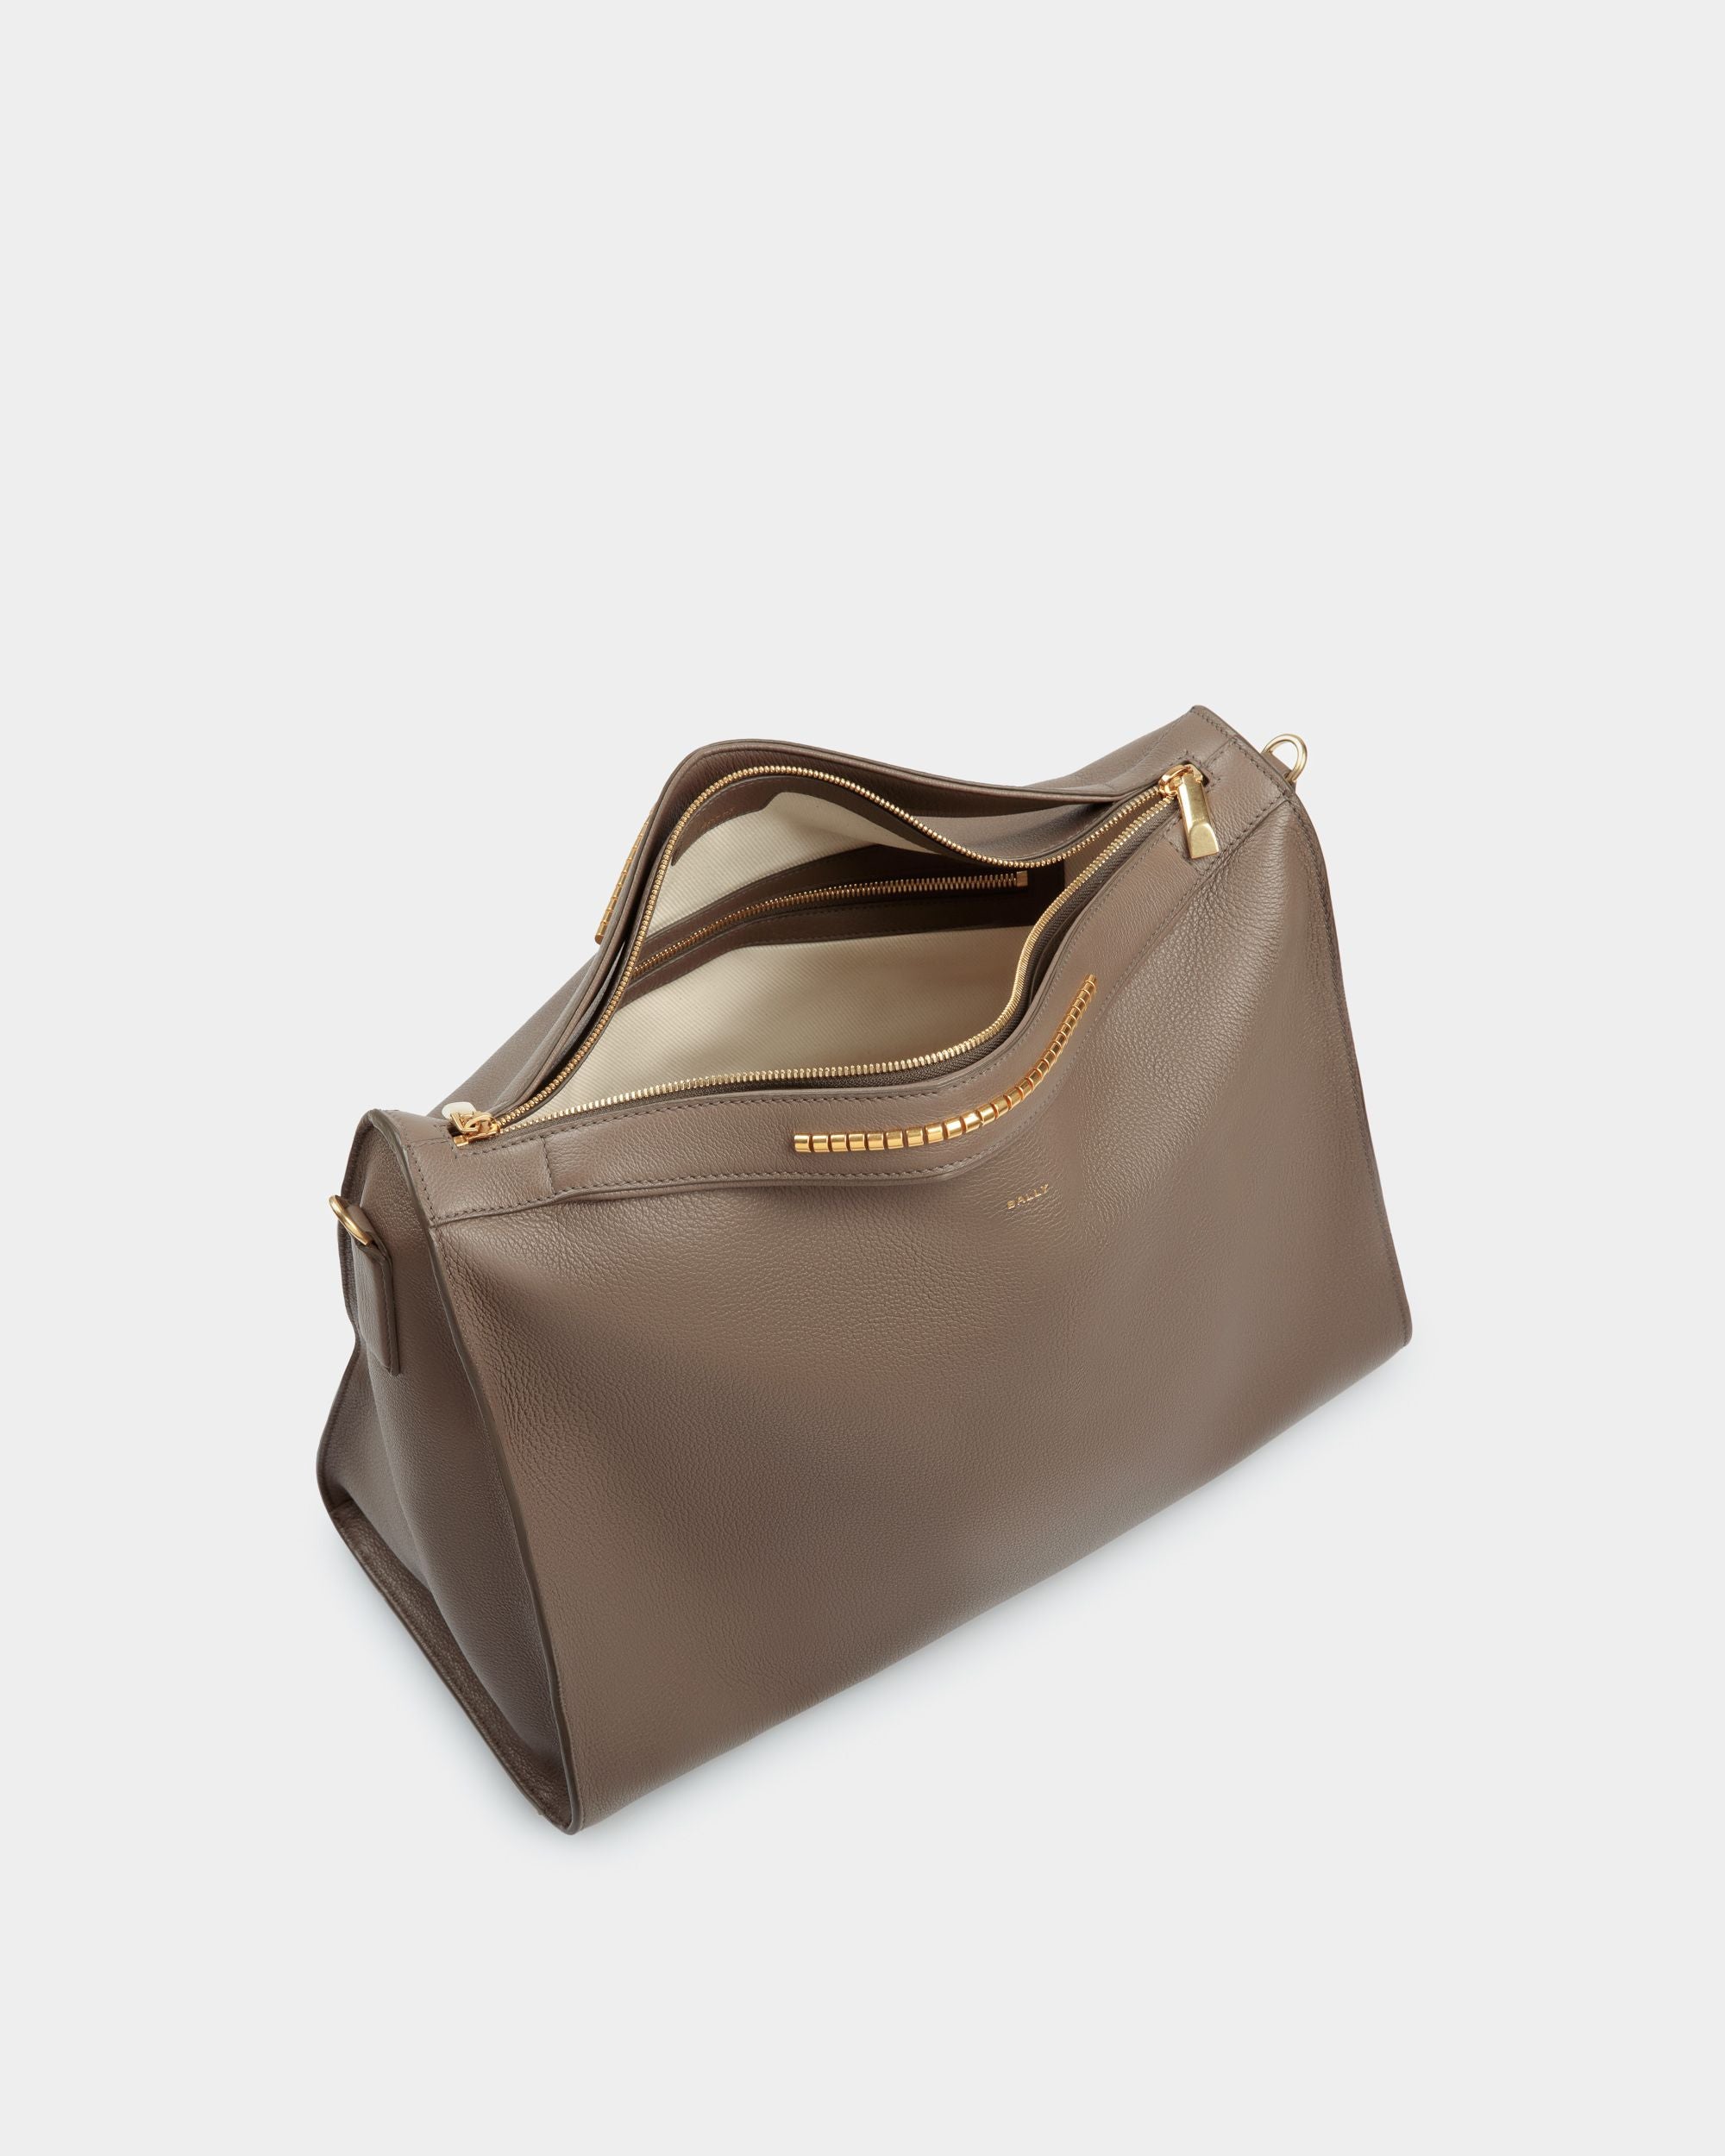 Top Handle Bags  Layka Small - Leather Top Handle Bag In Brown - Bally  Womens - Dramponga